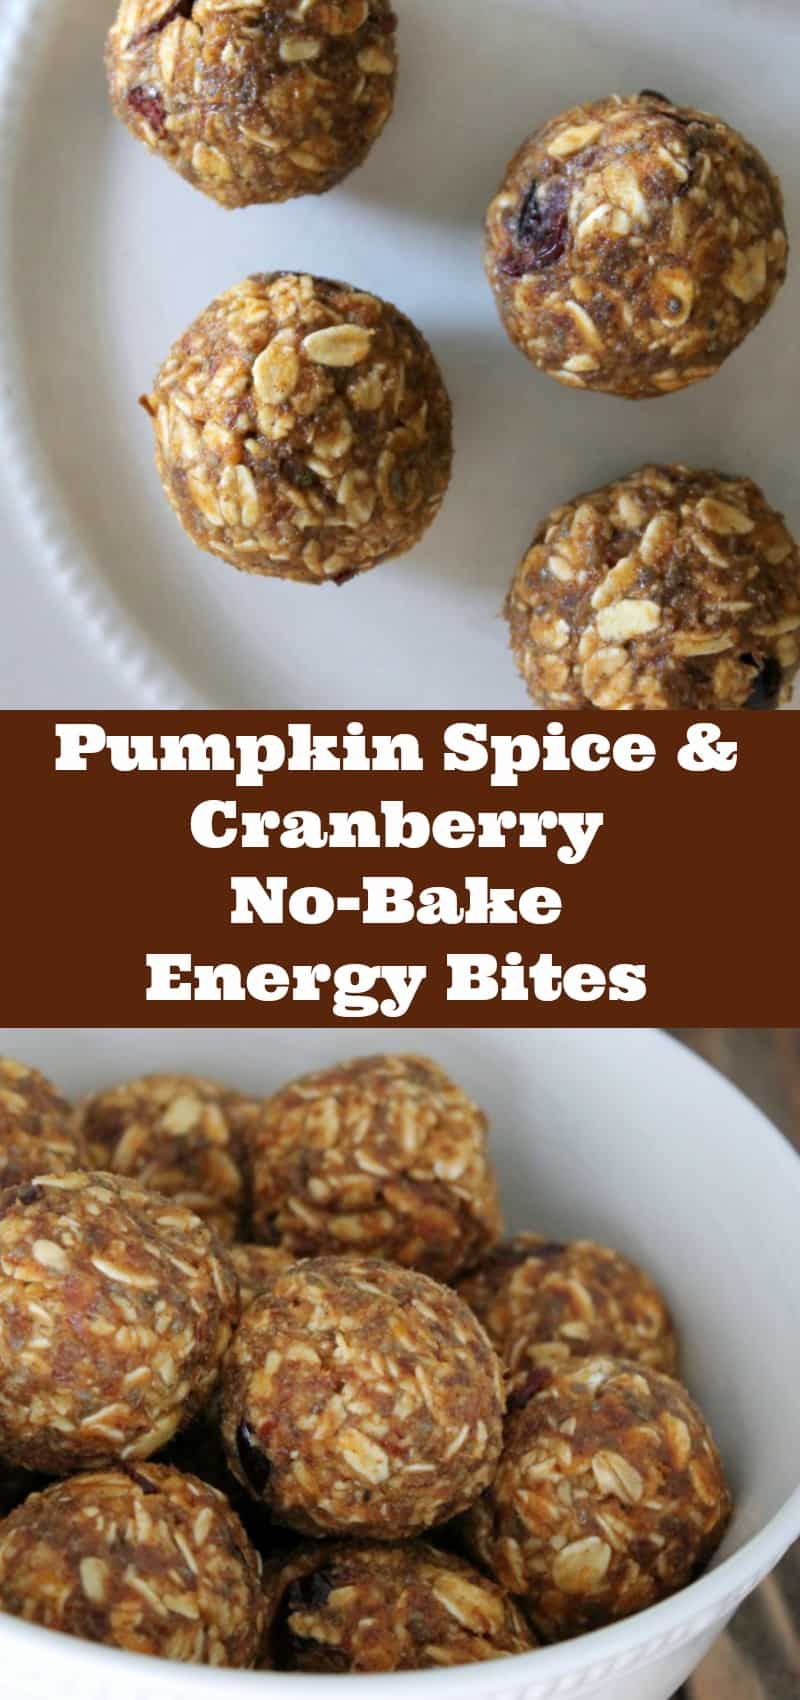 Pumpkin Spice and Cranberry No-bake energy bites